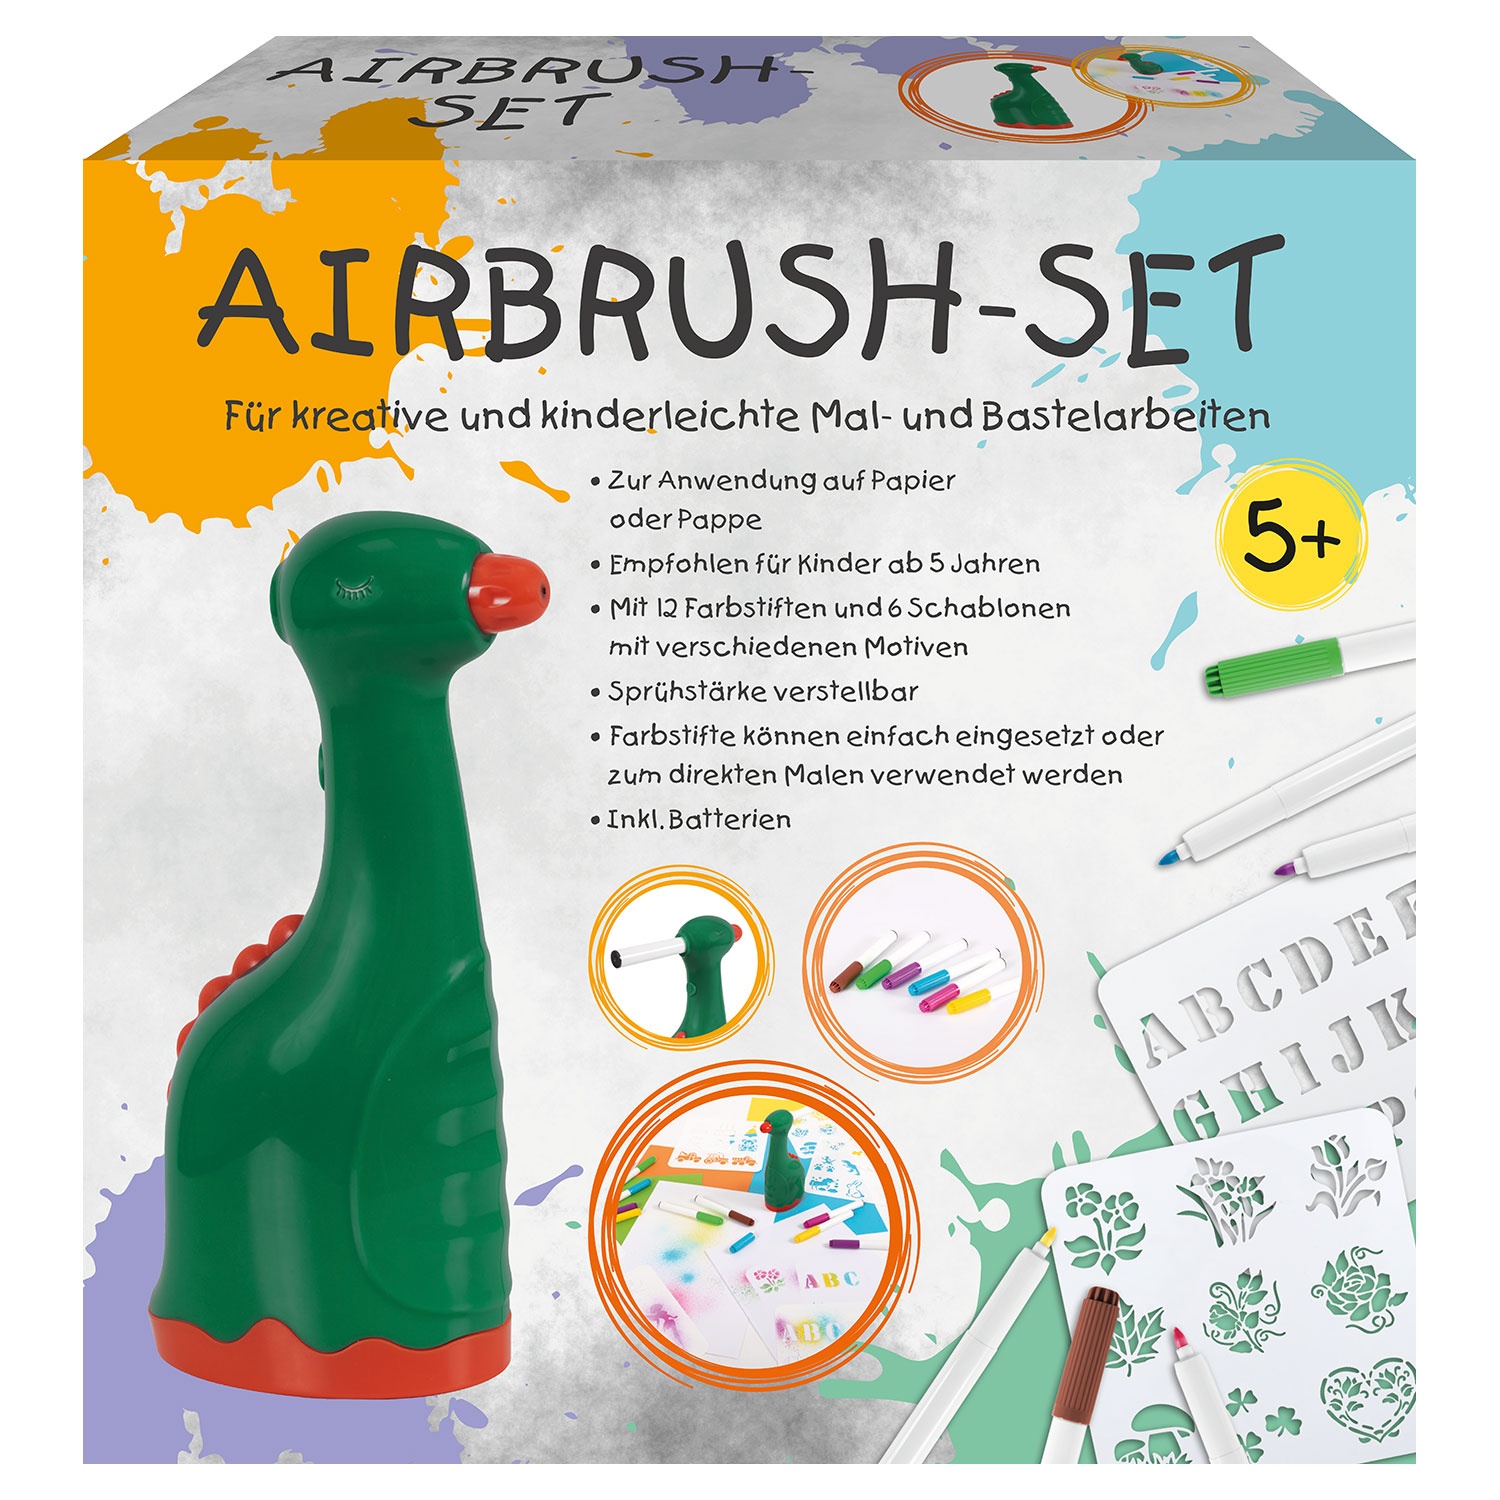 Airbrush-Set